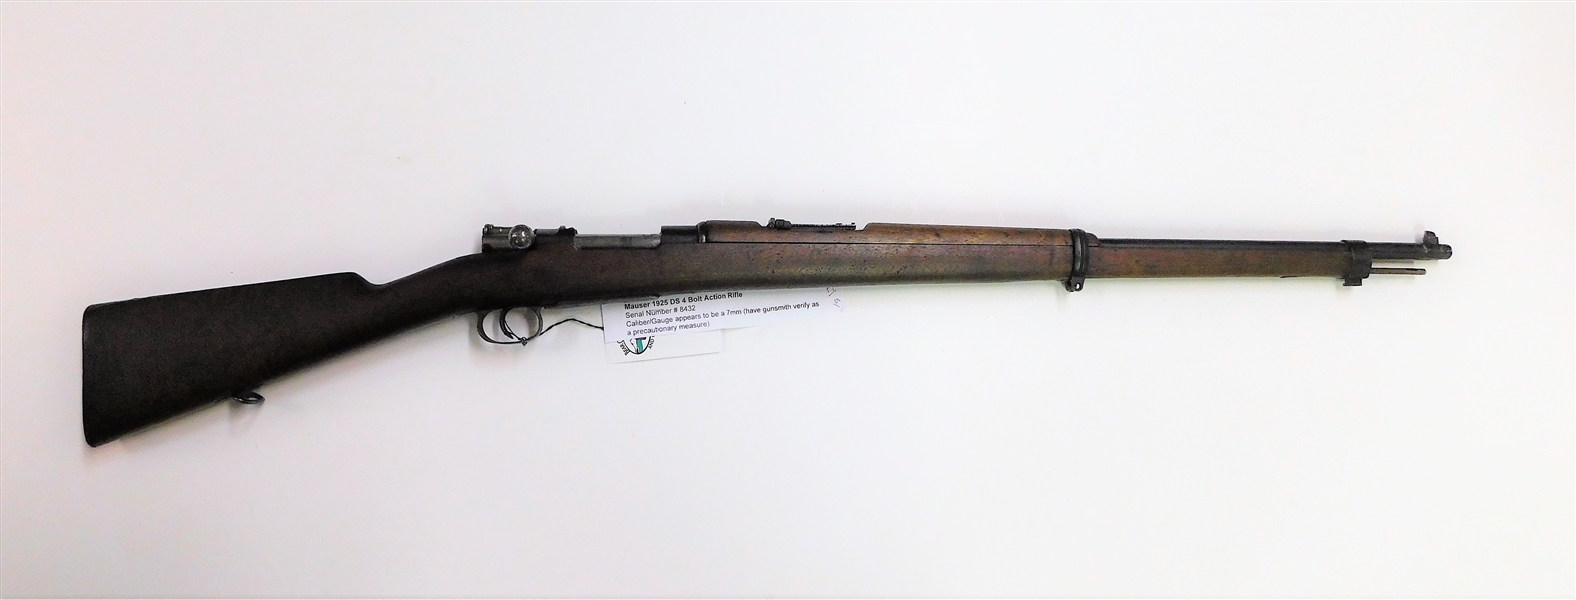 Mauser 1925 DS 4 - Bolt Action Rifle - 7mm